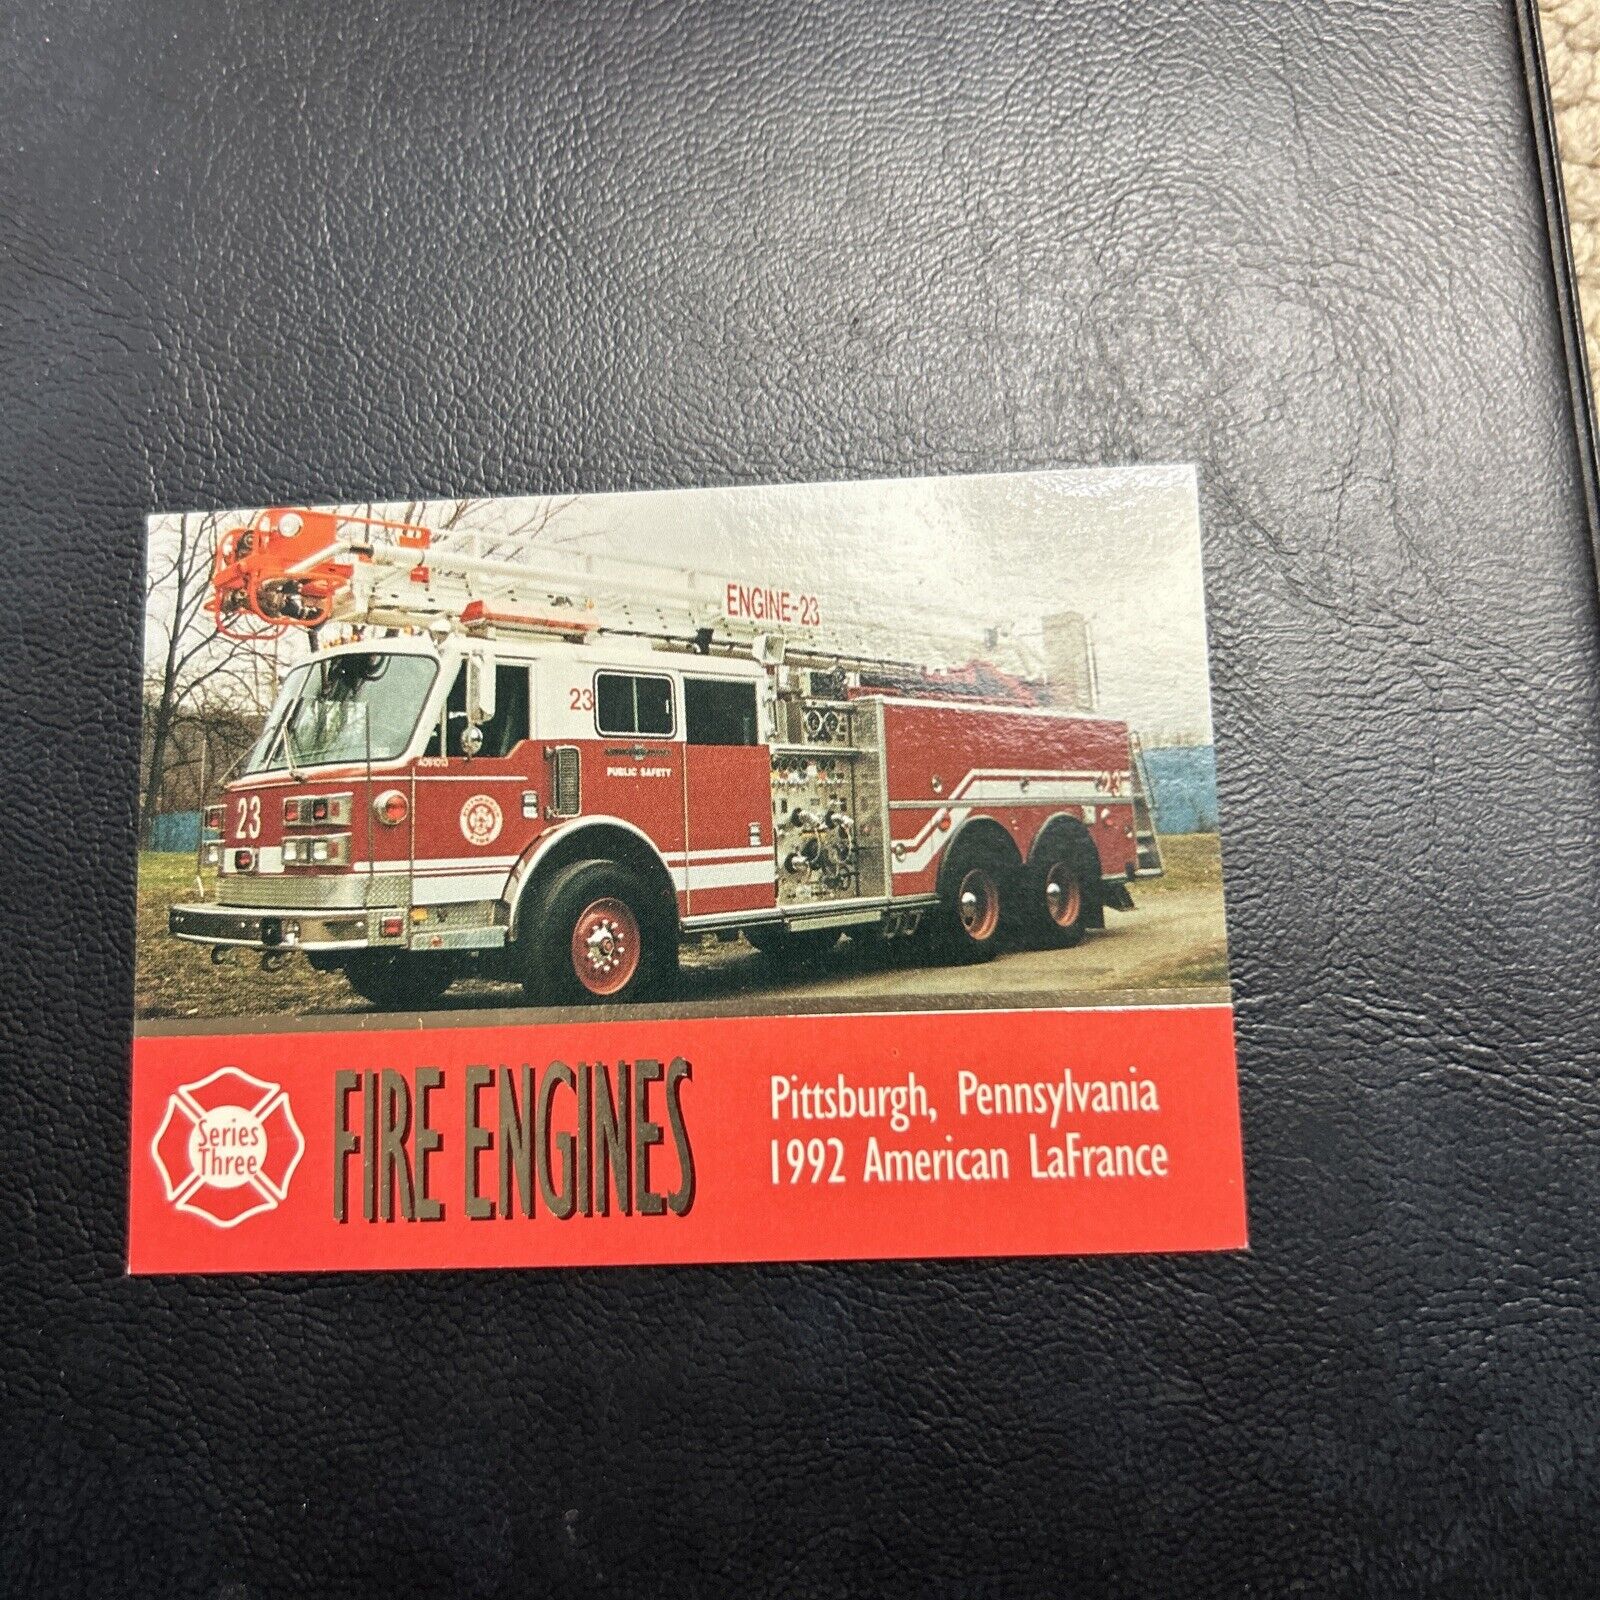 Jb29 Fire Engines Series 3 Three #280 Pittsburgh American Lafrance Pennsylvania